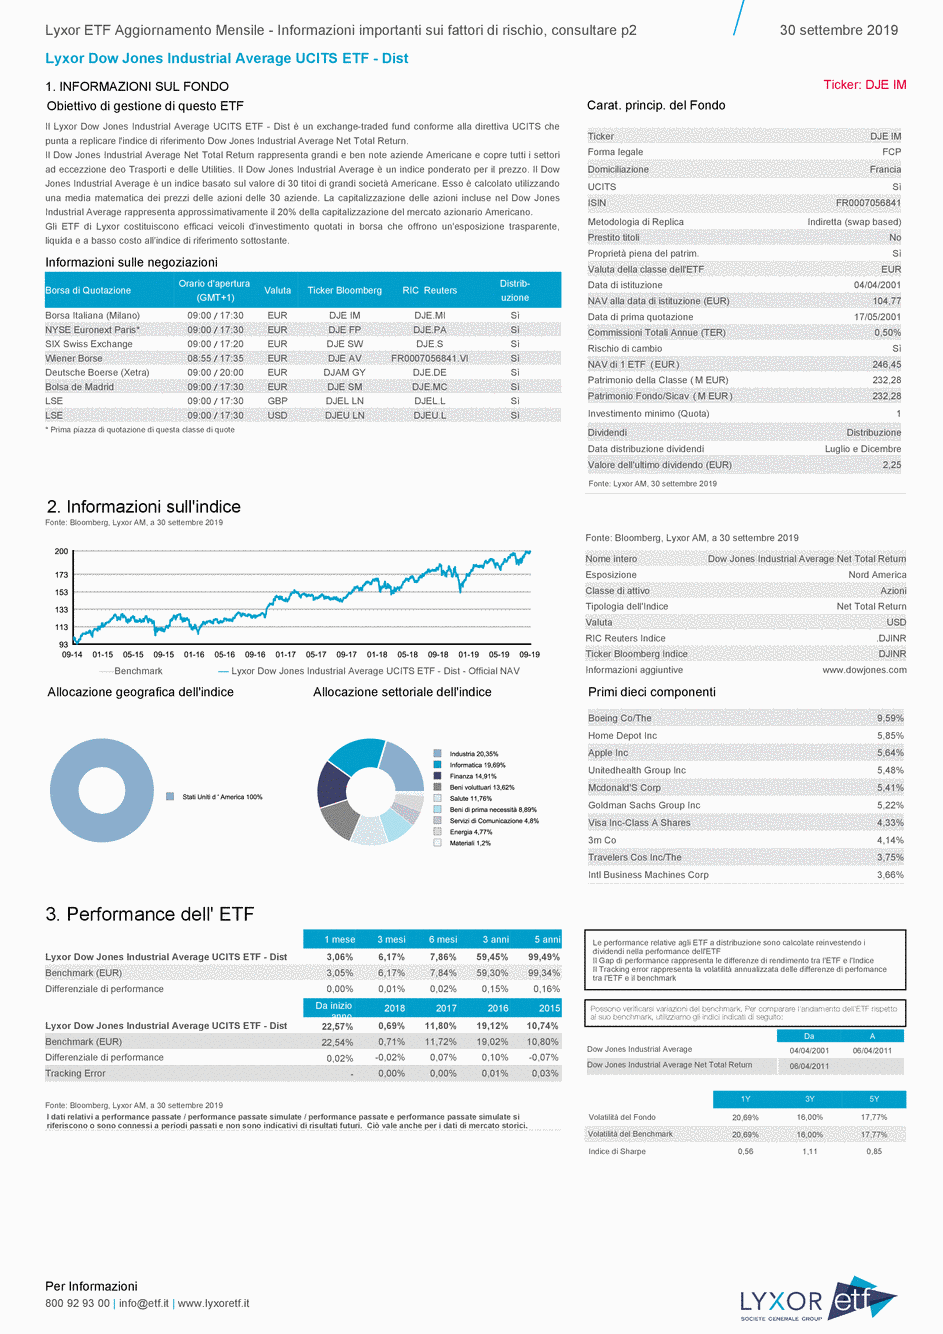 Reporting Lyxor Dow Jones Industrial Average UCITS ETF - Dist - 30/09/2019 - Italien